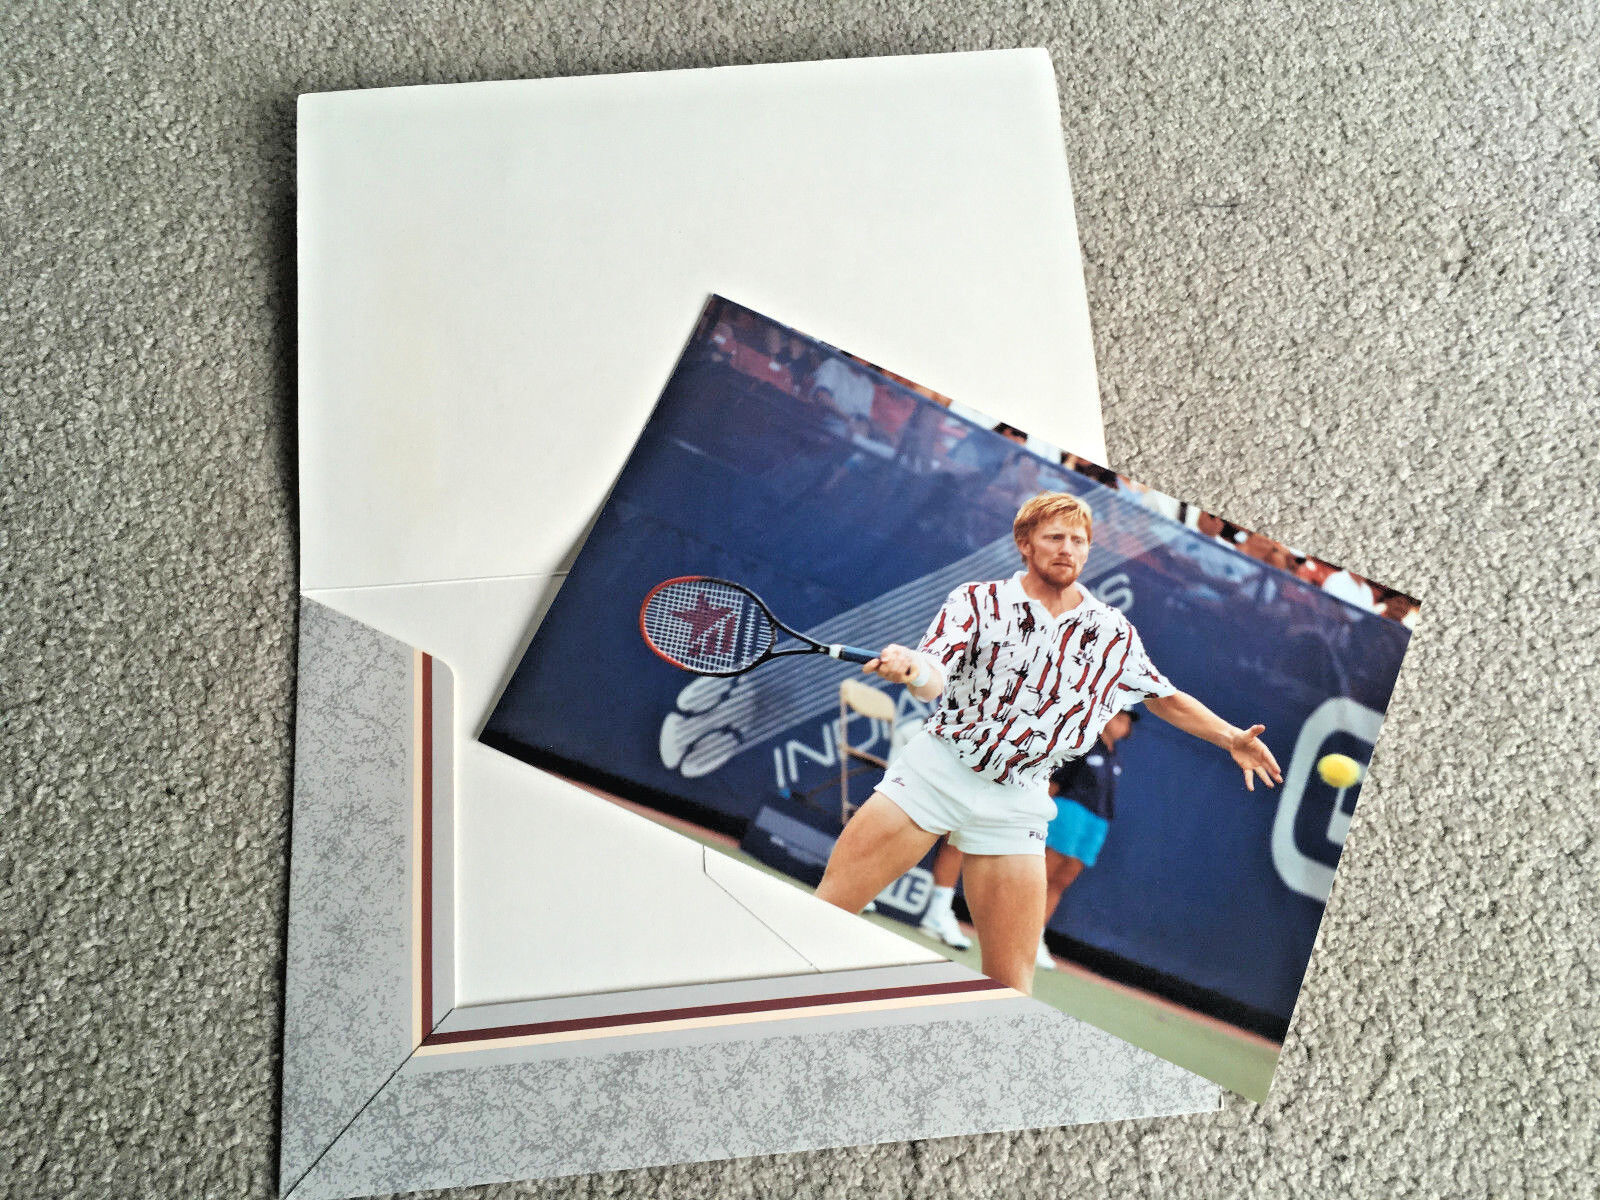 COLOR Press Photo Boris Becker Tennis Player 8x12  Folder Unknown Match 1994?